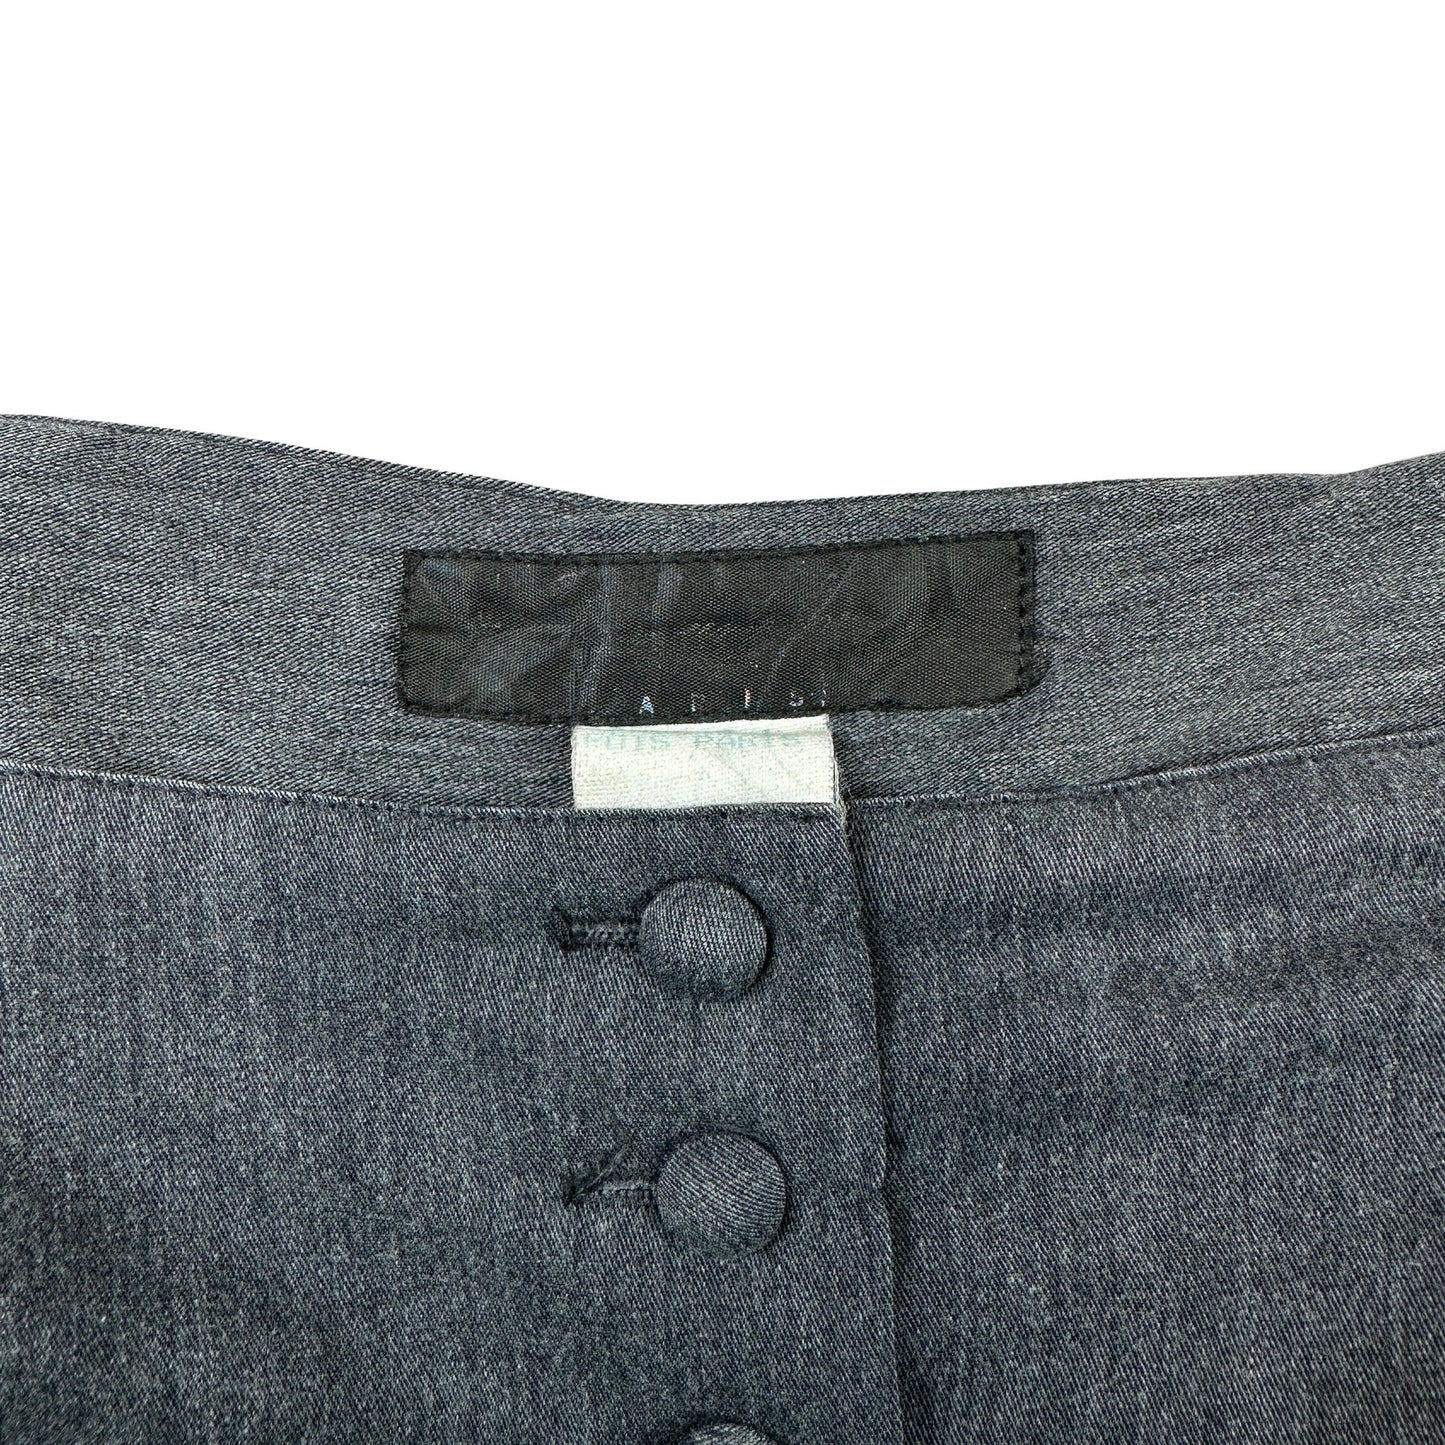 90s Vintage Grey Button Down Maxi Skirt 10